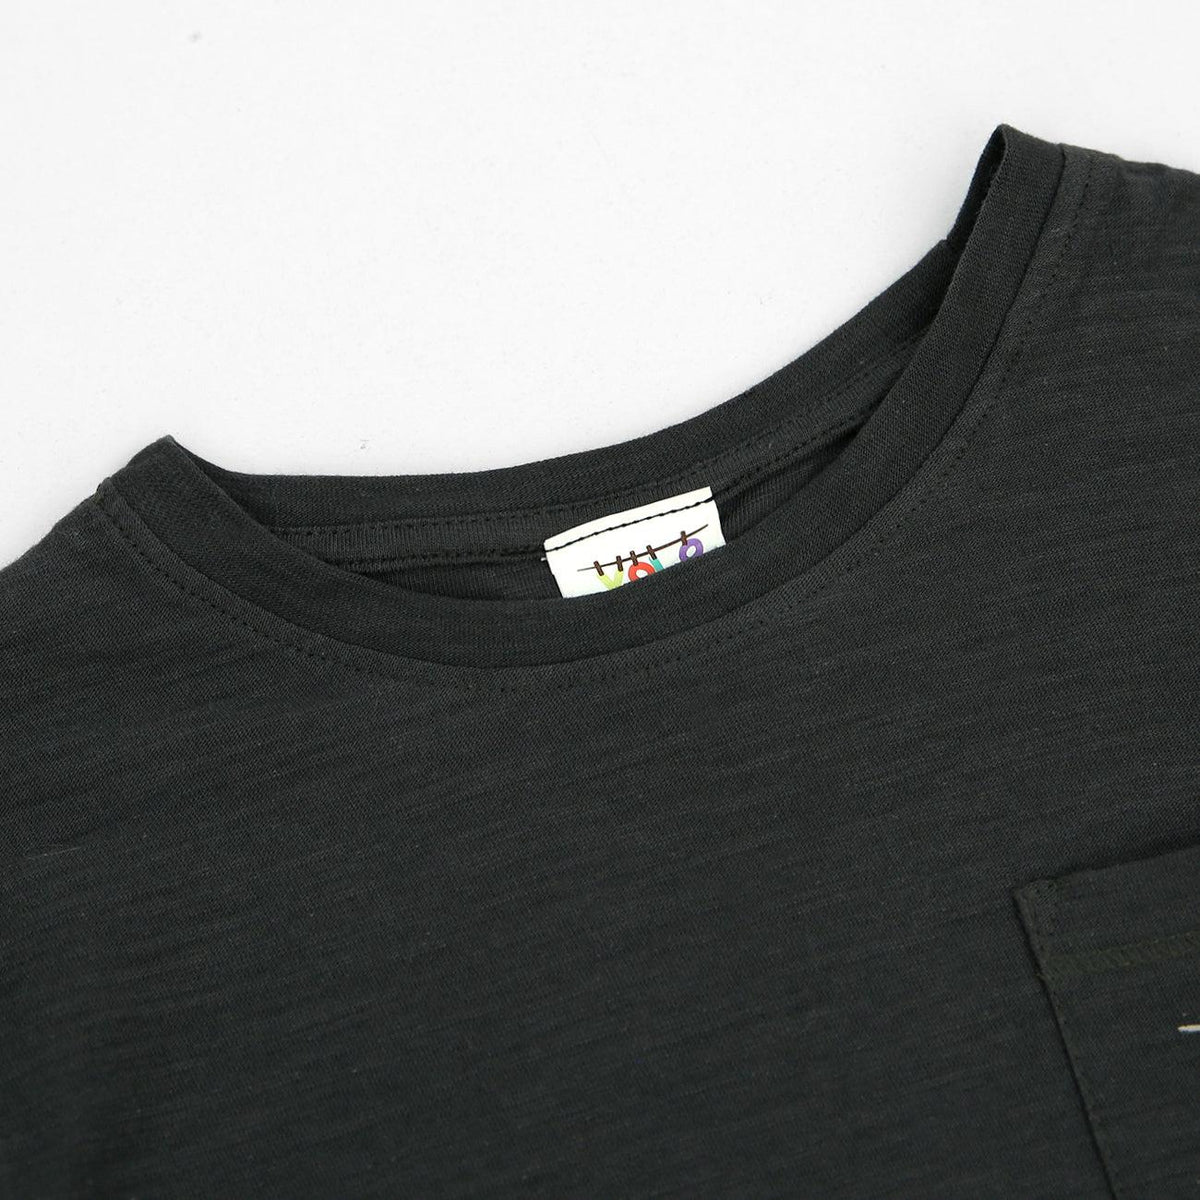 Charcoal Premium Quality Slub Jersey Soft Cotton T-Shirt For Boys (YO-11182) - Brands River